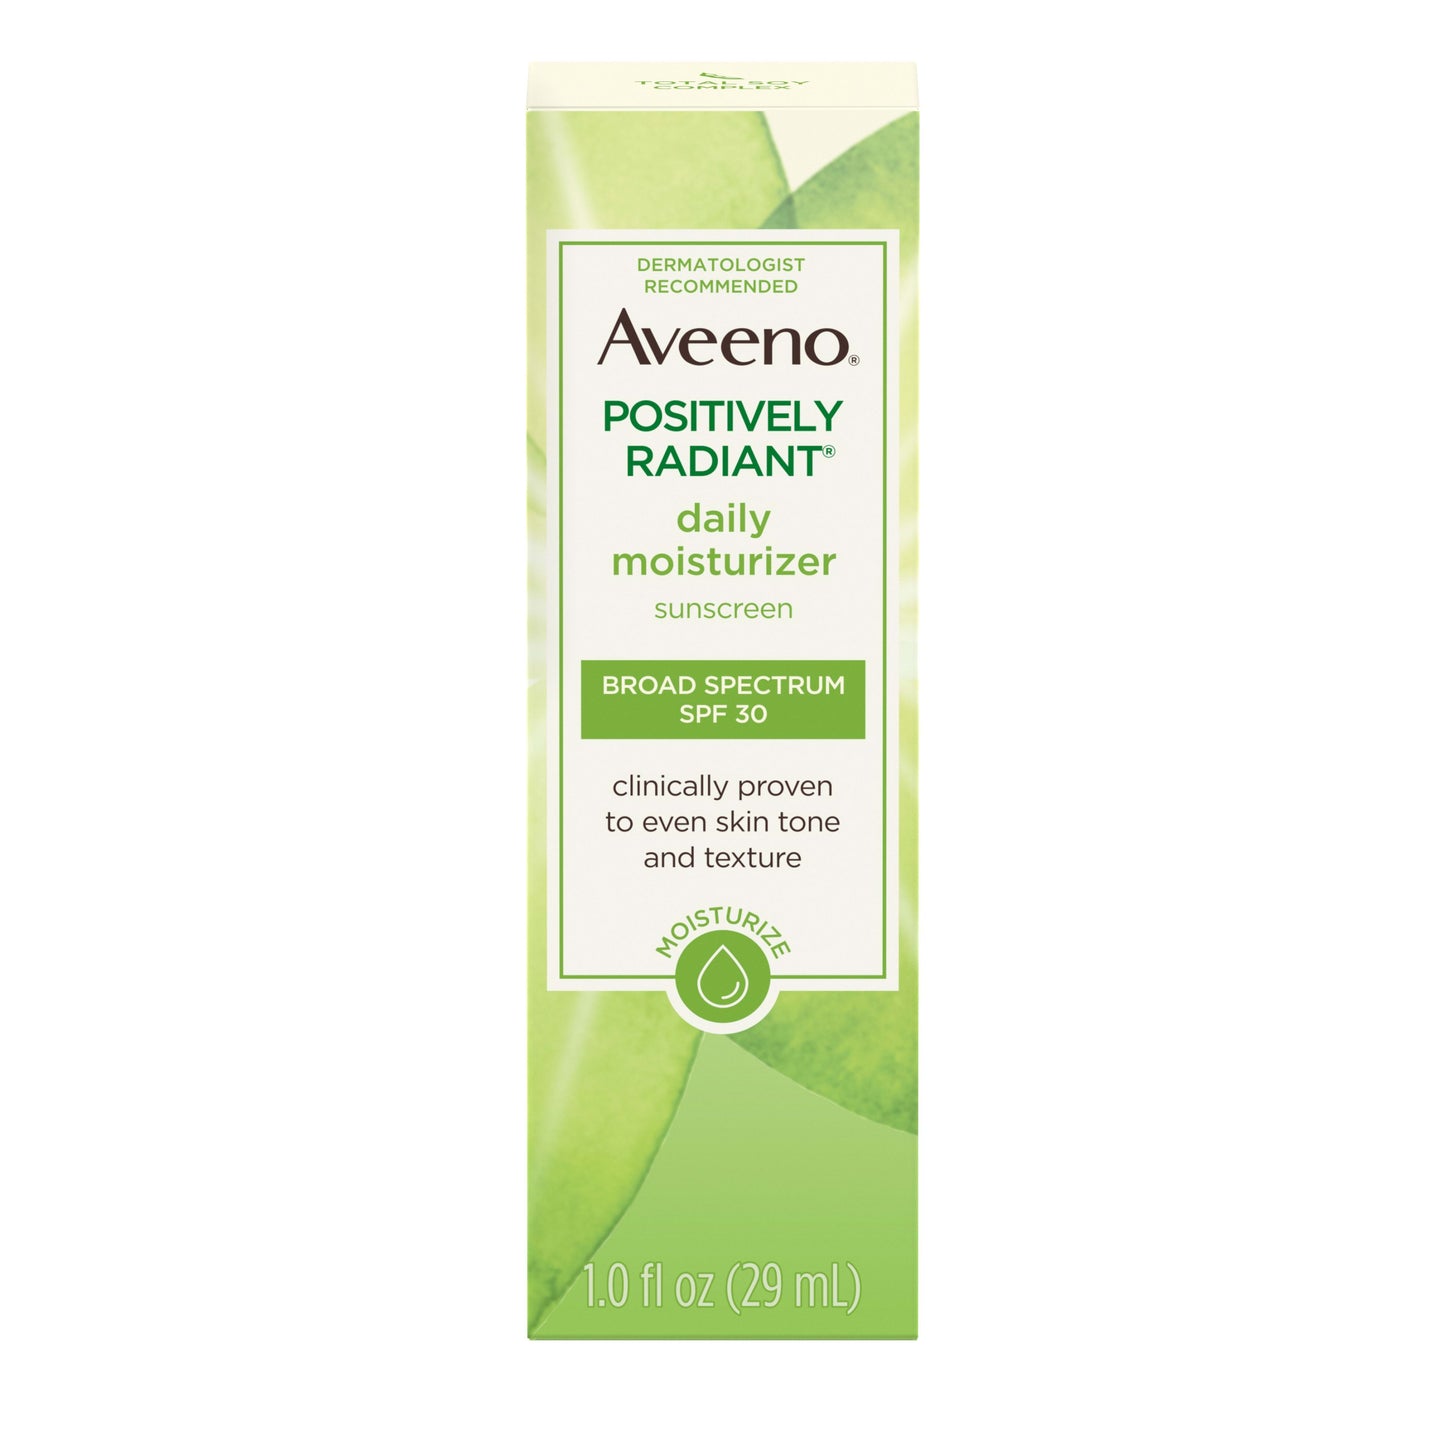 Aveeno Positively Radiant Daily Moisturizer Sunscreen with SPF 30, 1.0 fl.oz / 29ml